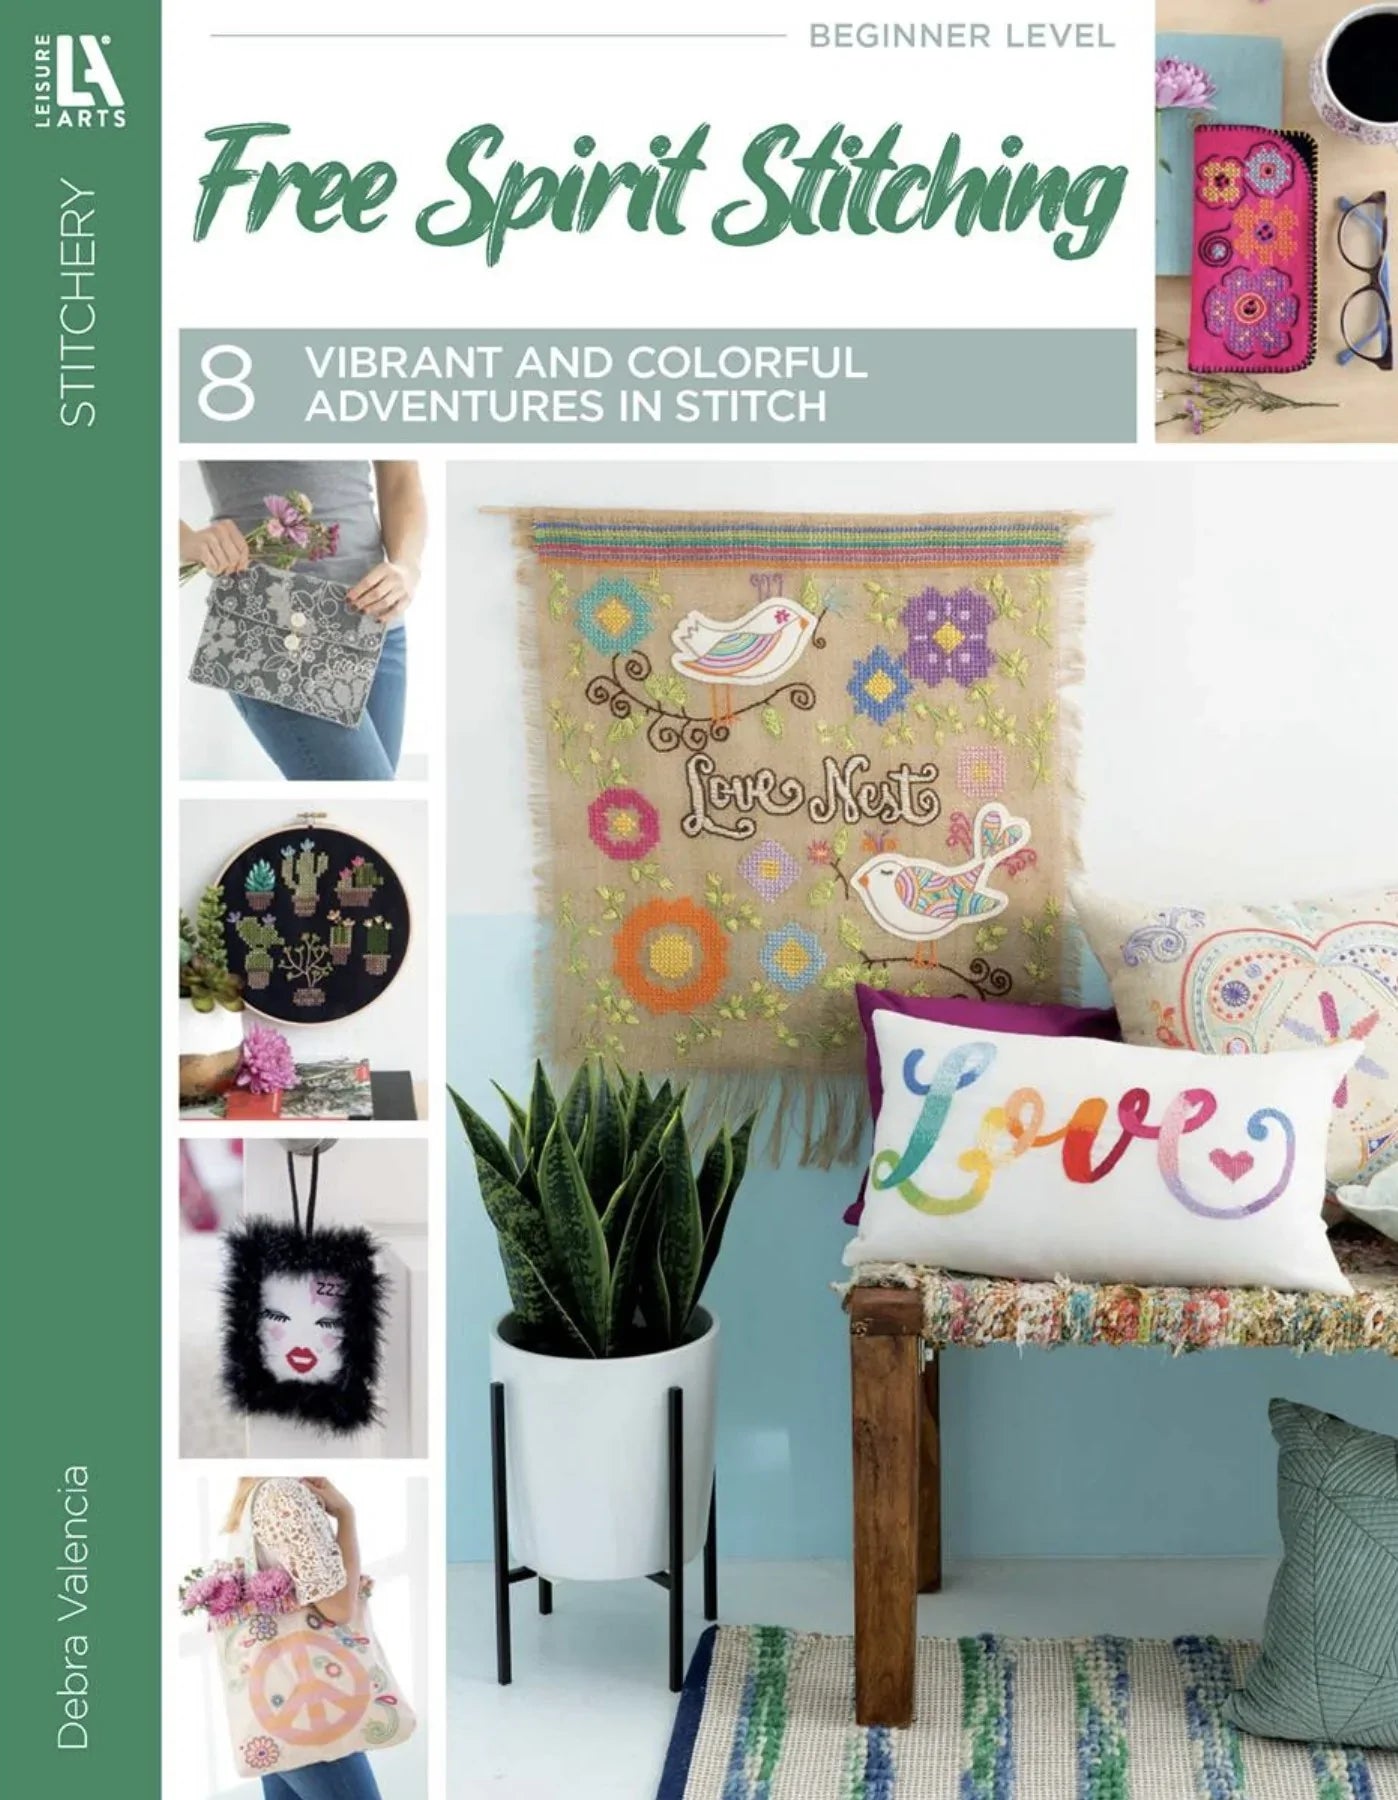 Free Spirit Stitching Embroidery Book by Debra Valencia - Leisure Arts